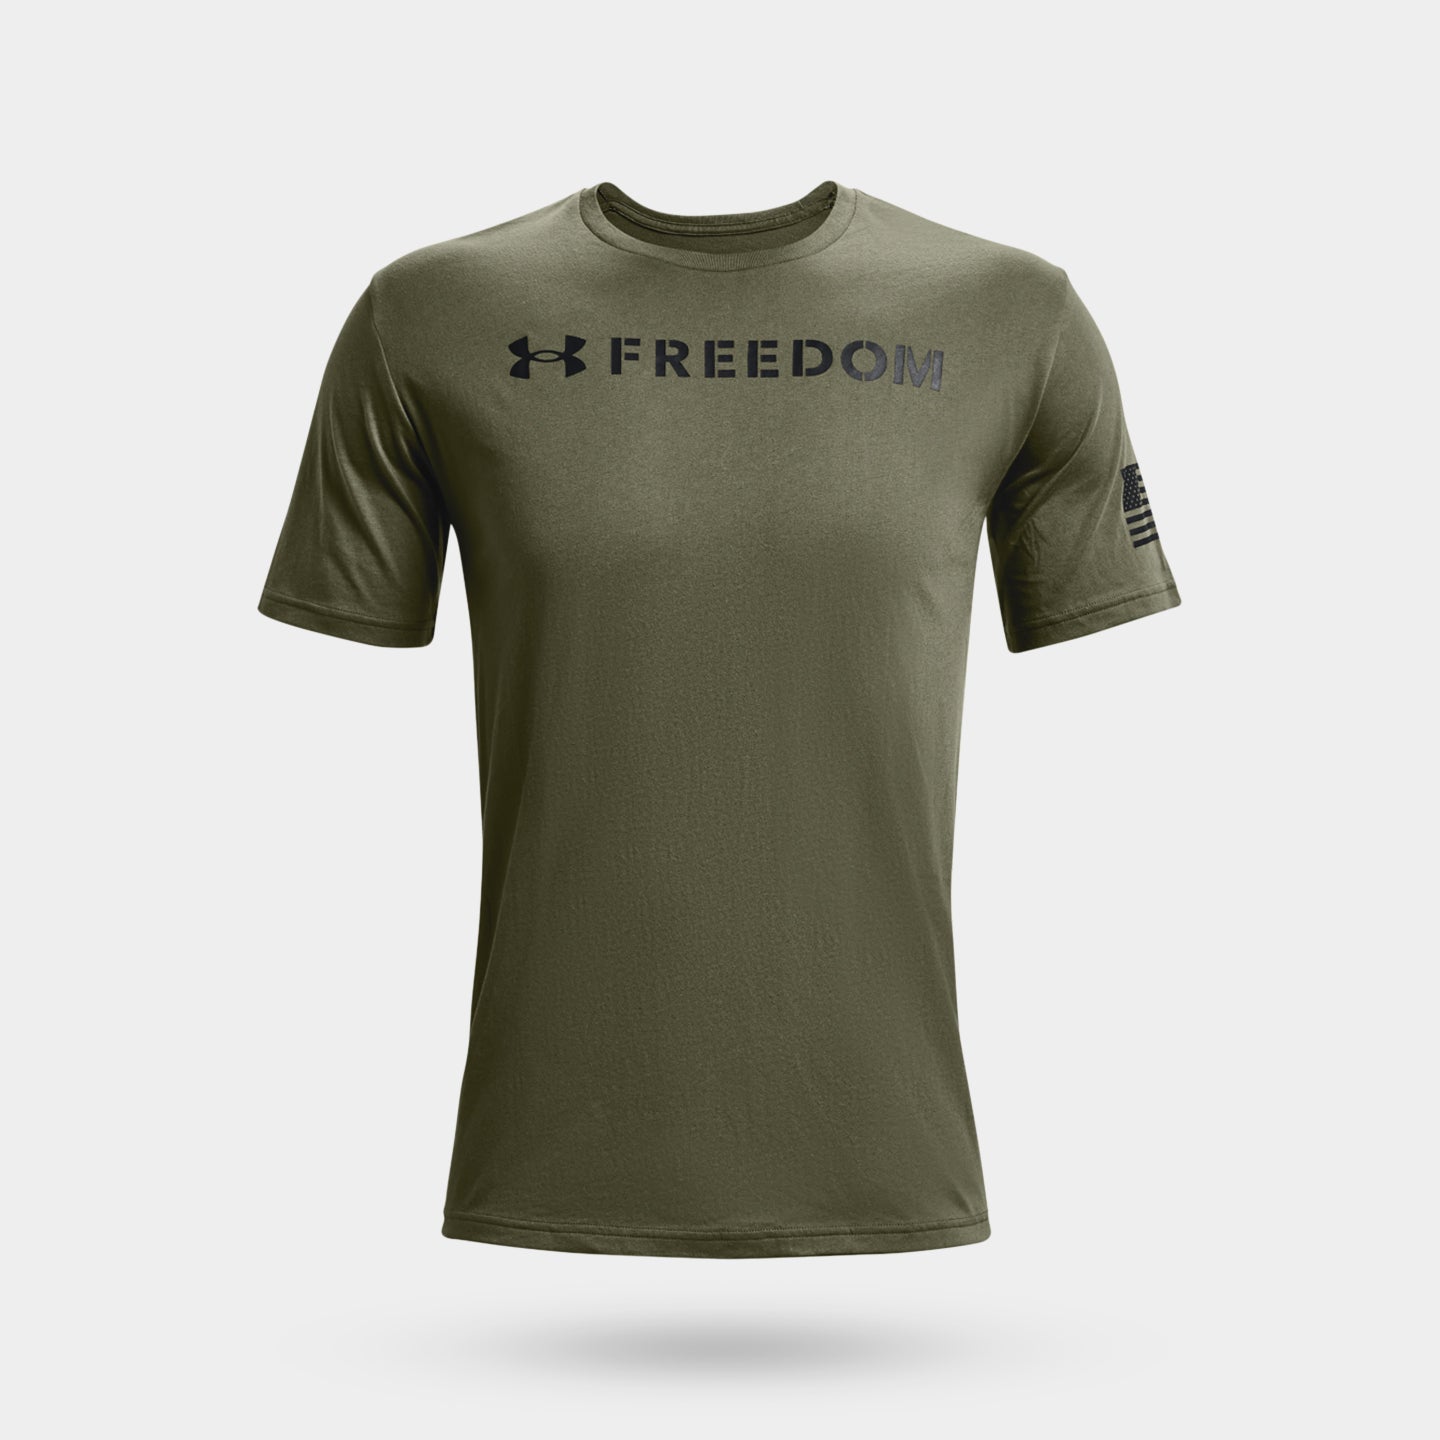 SKU6400761 Under Armour Freedom Flag Bold Tee, Marine OD Green, 2XL